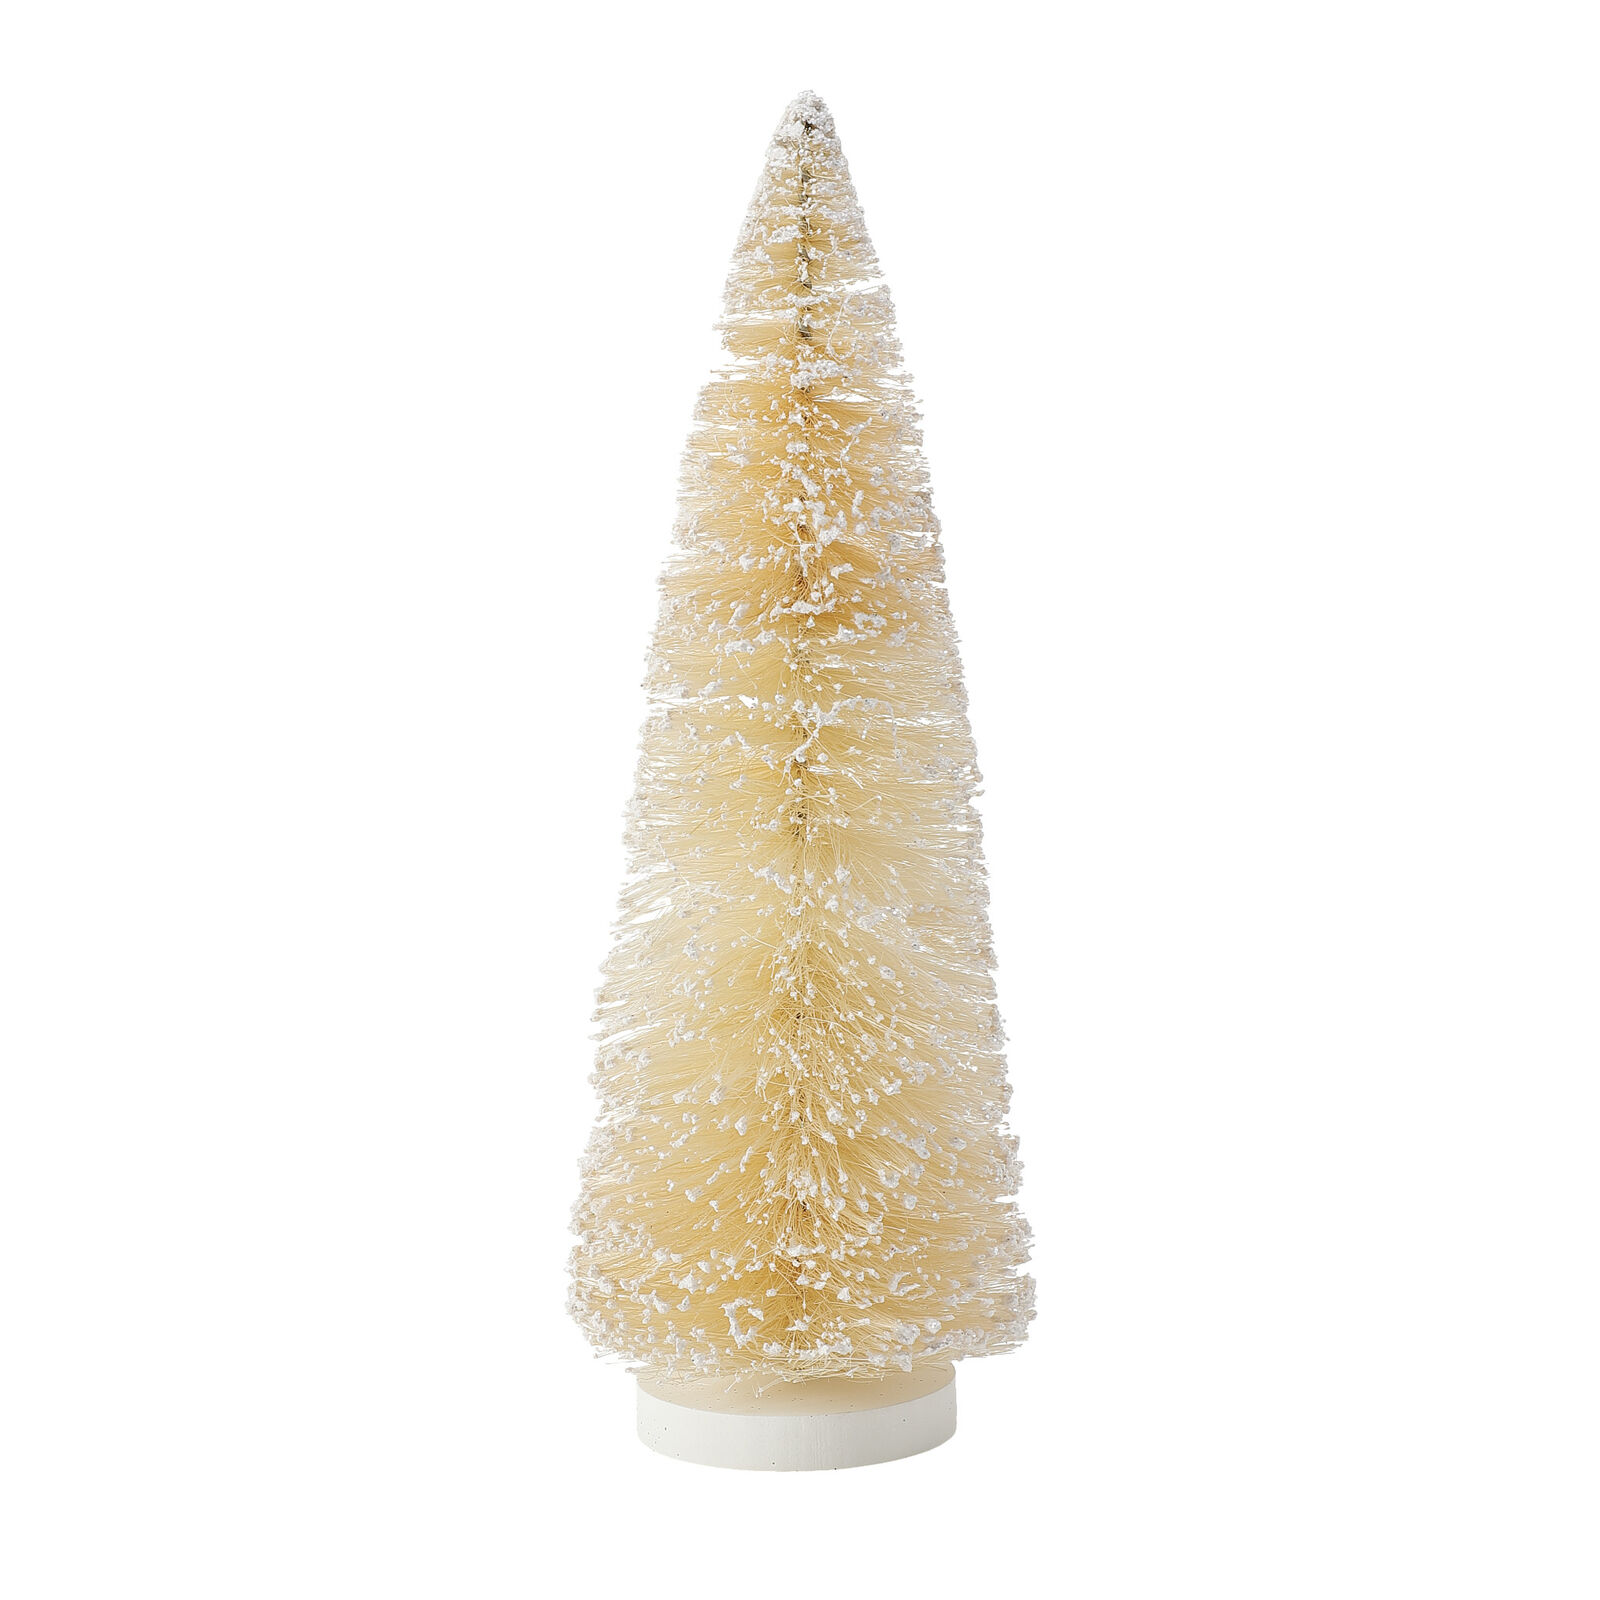 Department 56 Christmas Basics Decorative Snow Glitter Tree Figurine 14 Inch